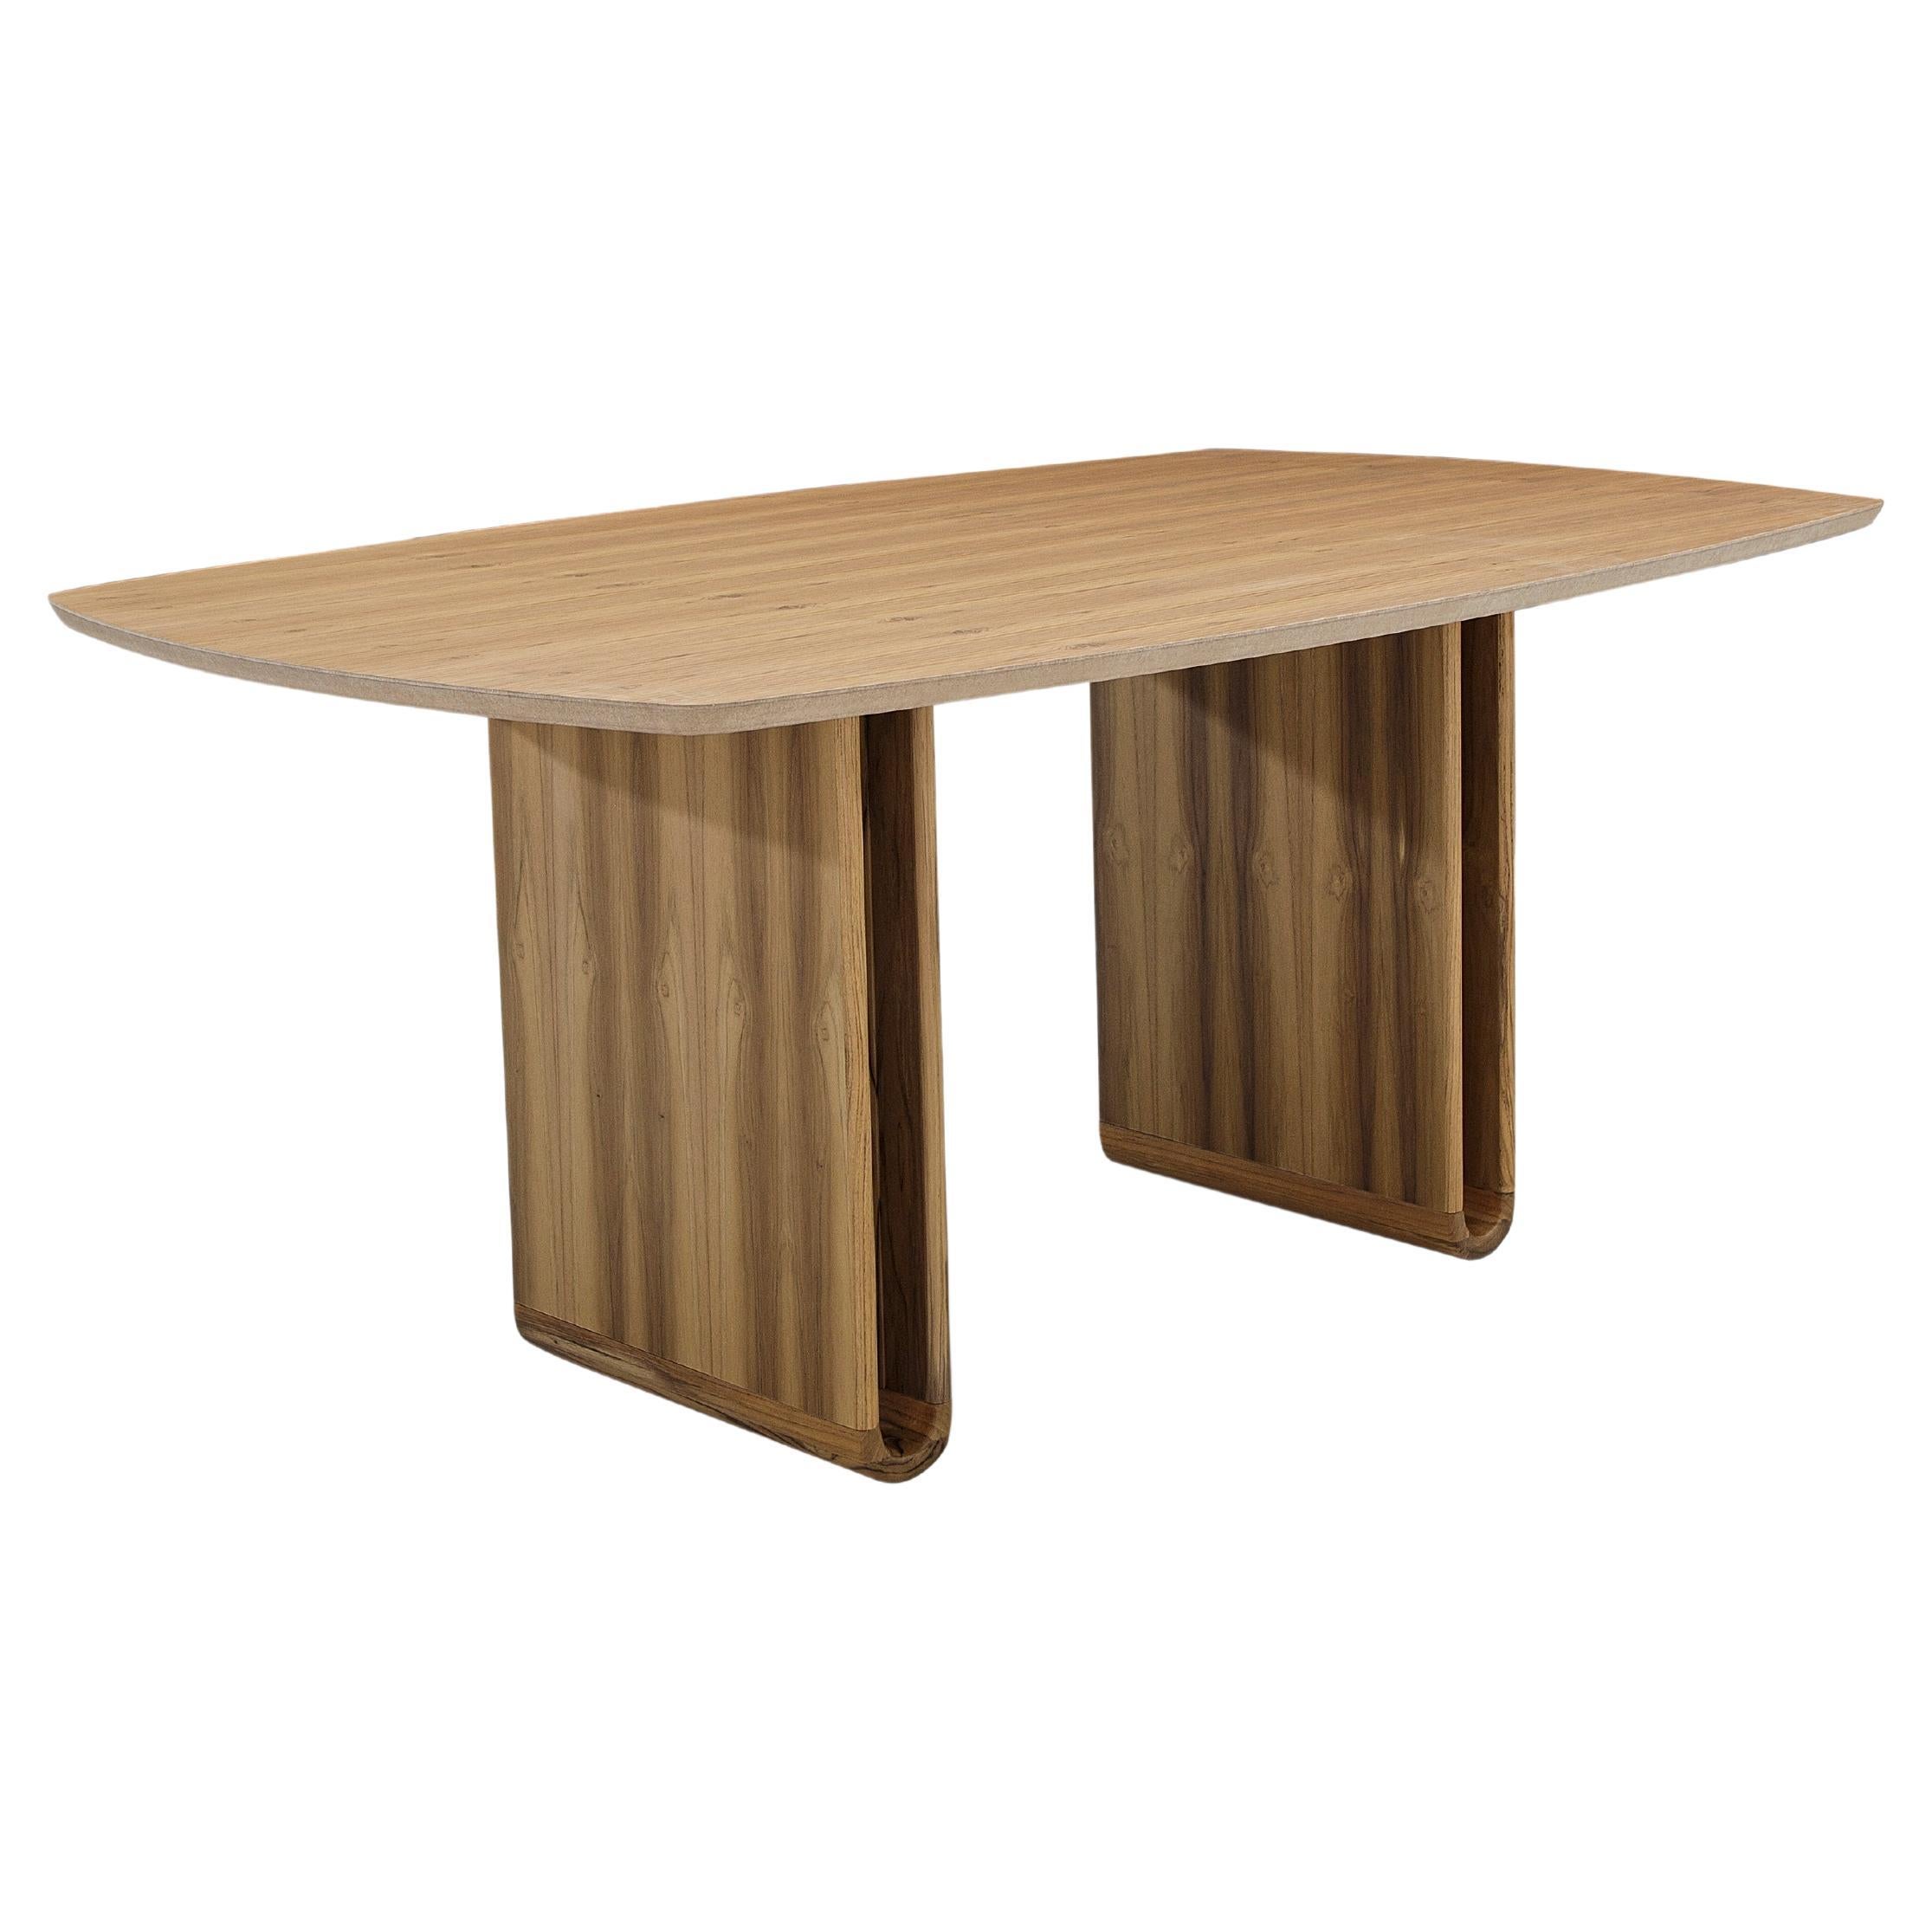 Neon Dining Table in Teak Wood Finish 68''